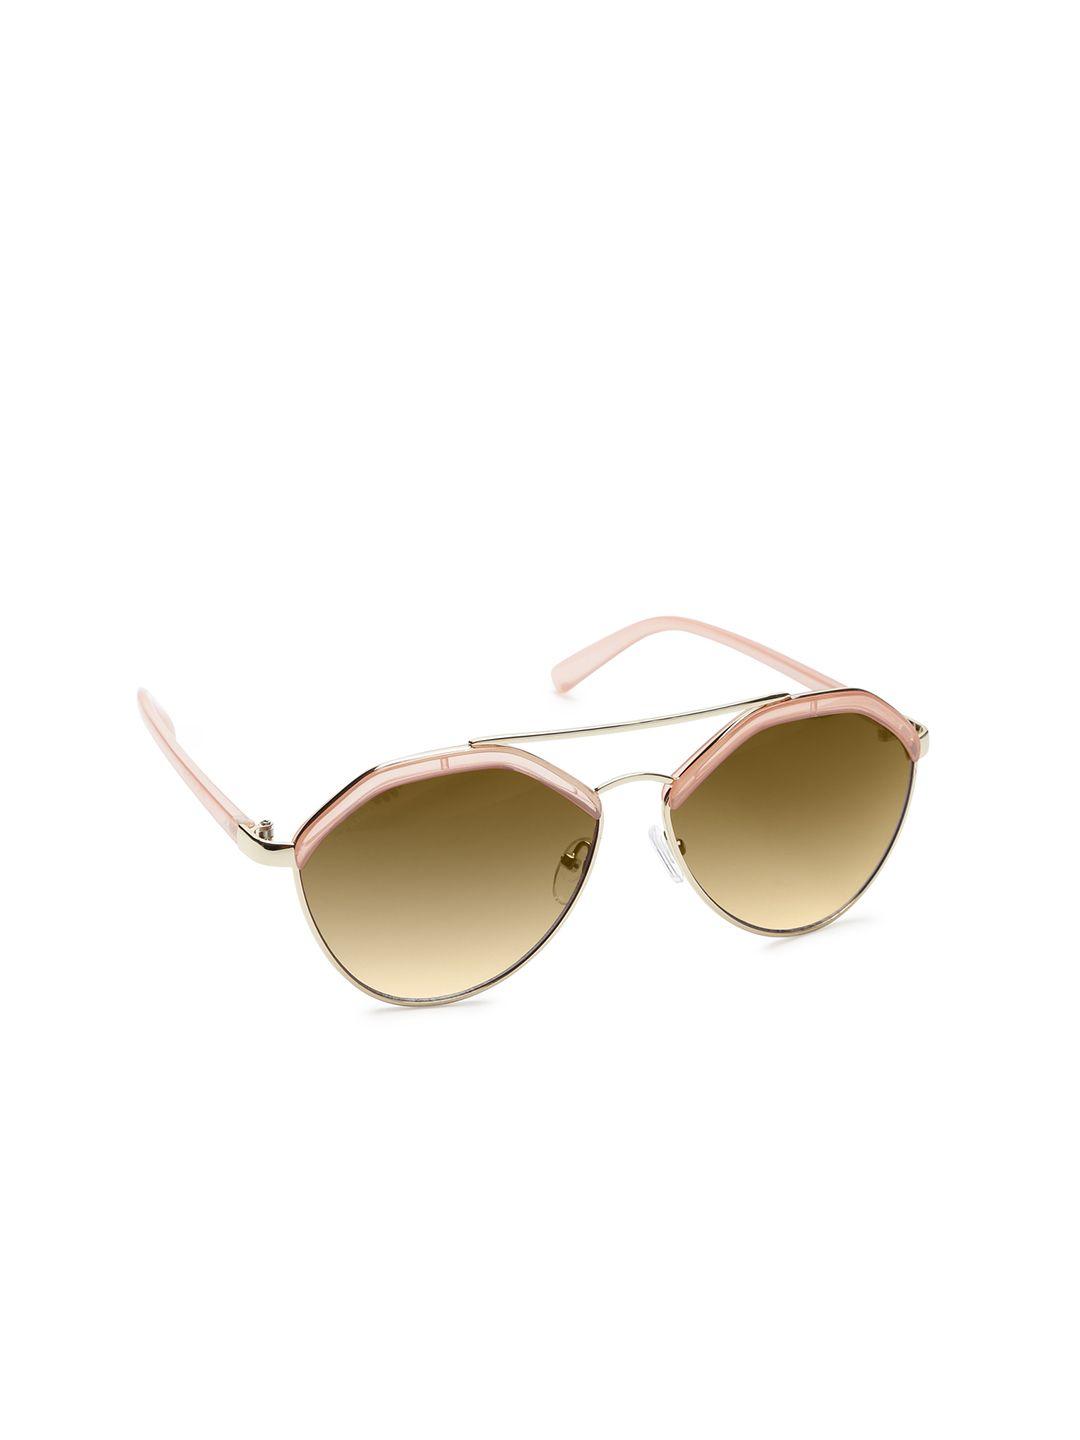 fastrack-women-aviator-sunglasses-c069br2f